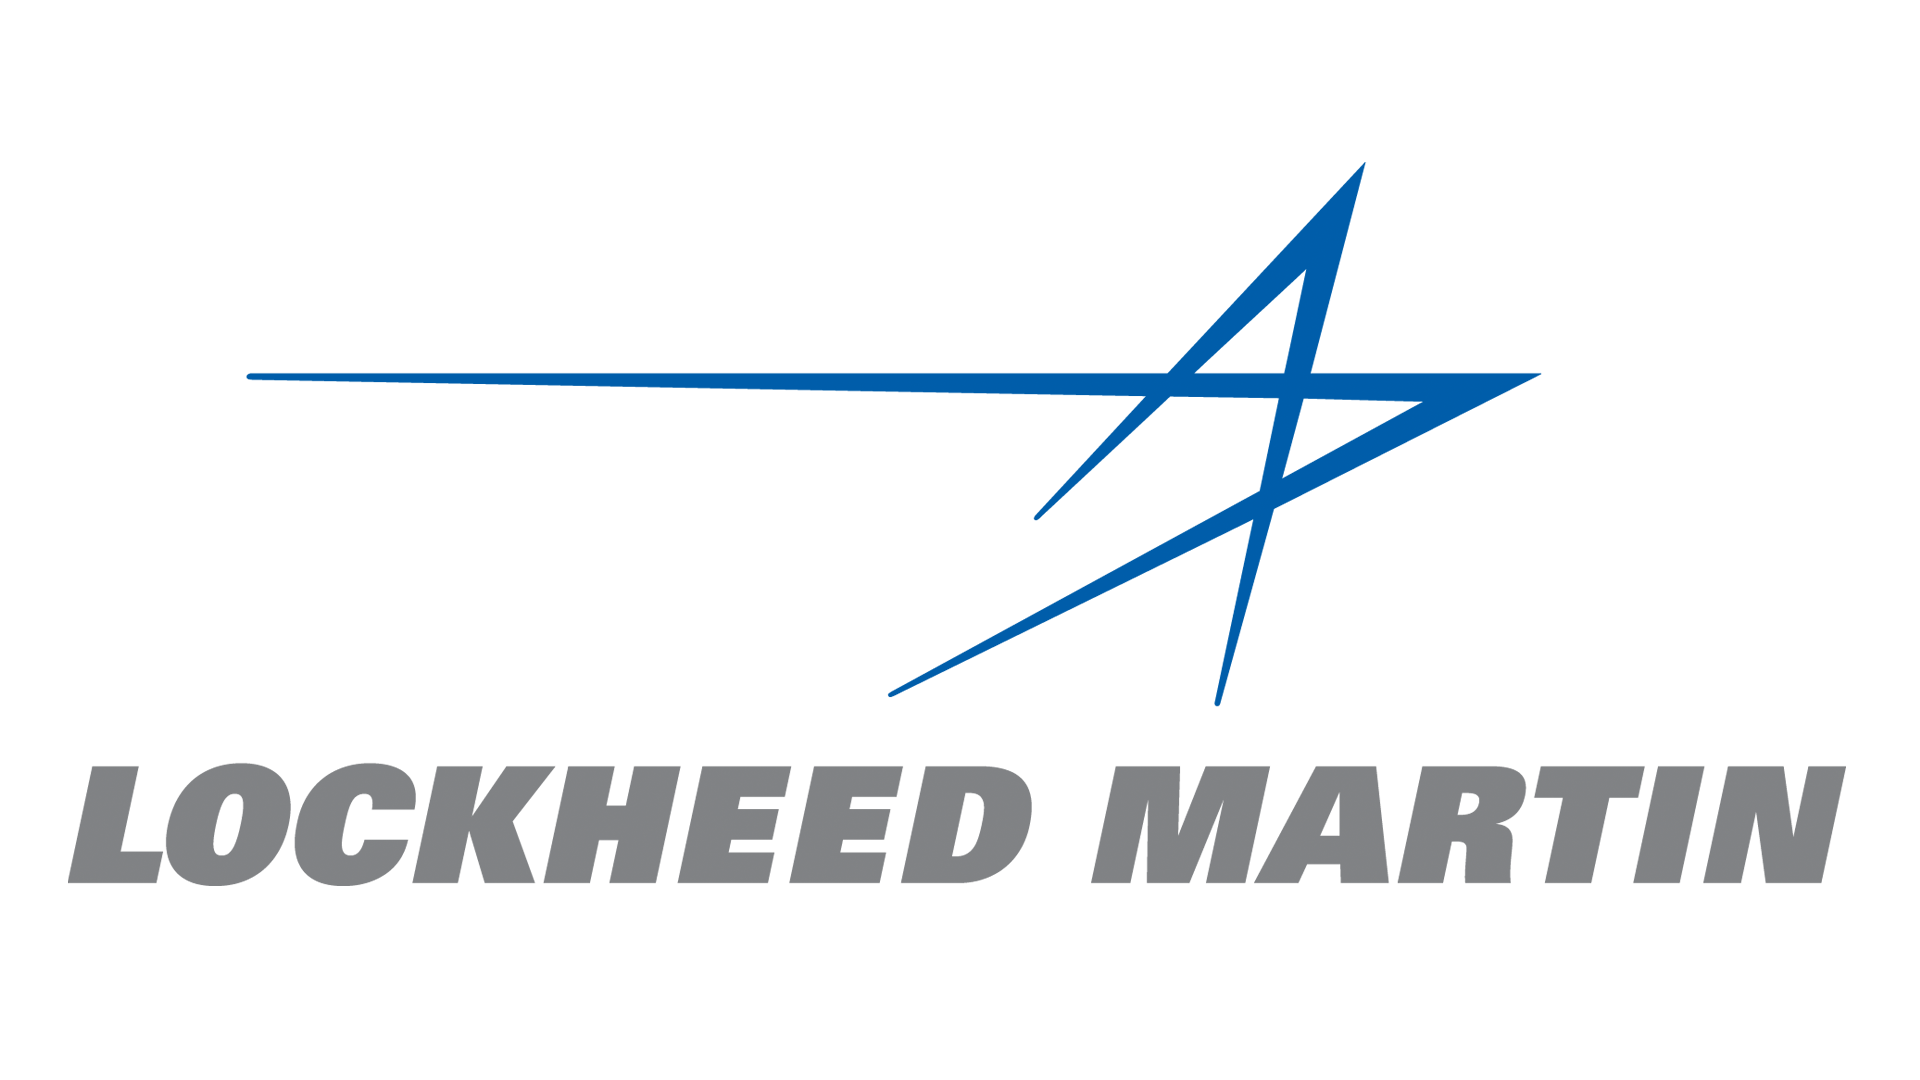 Kyle Bloom Pitches Lockheed Martin on February 5